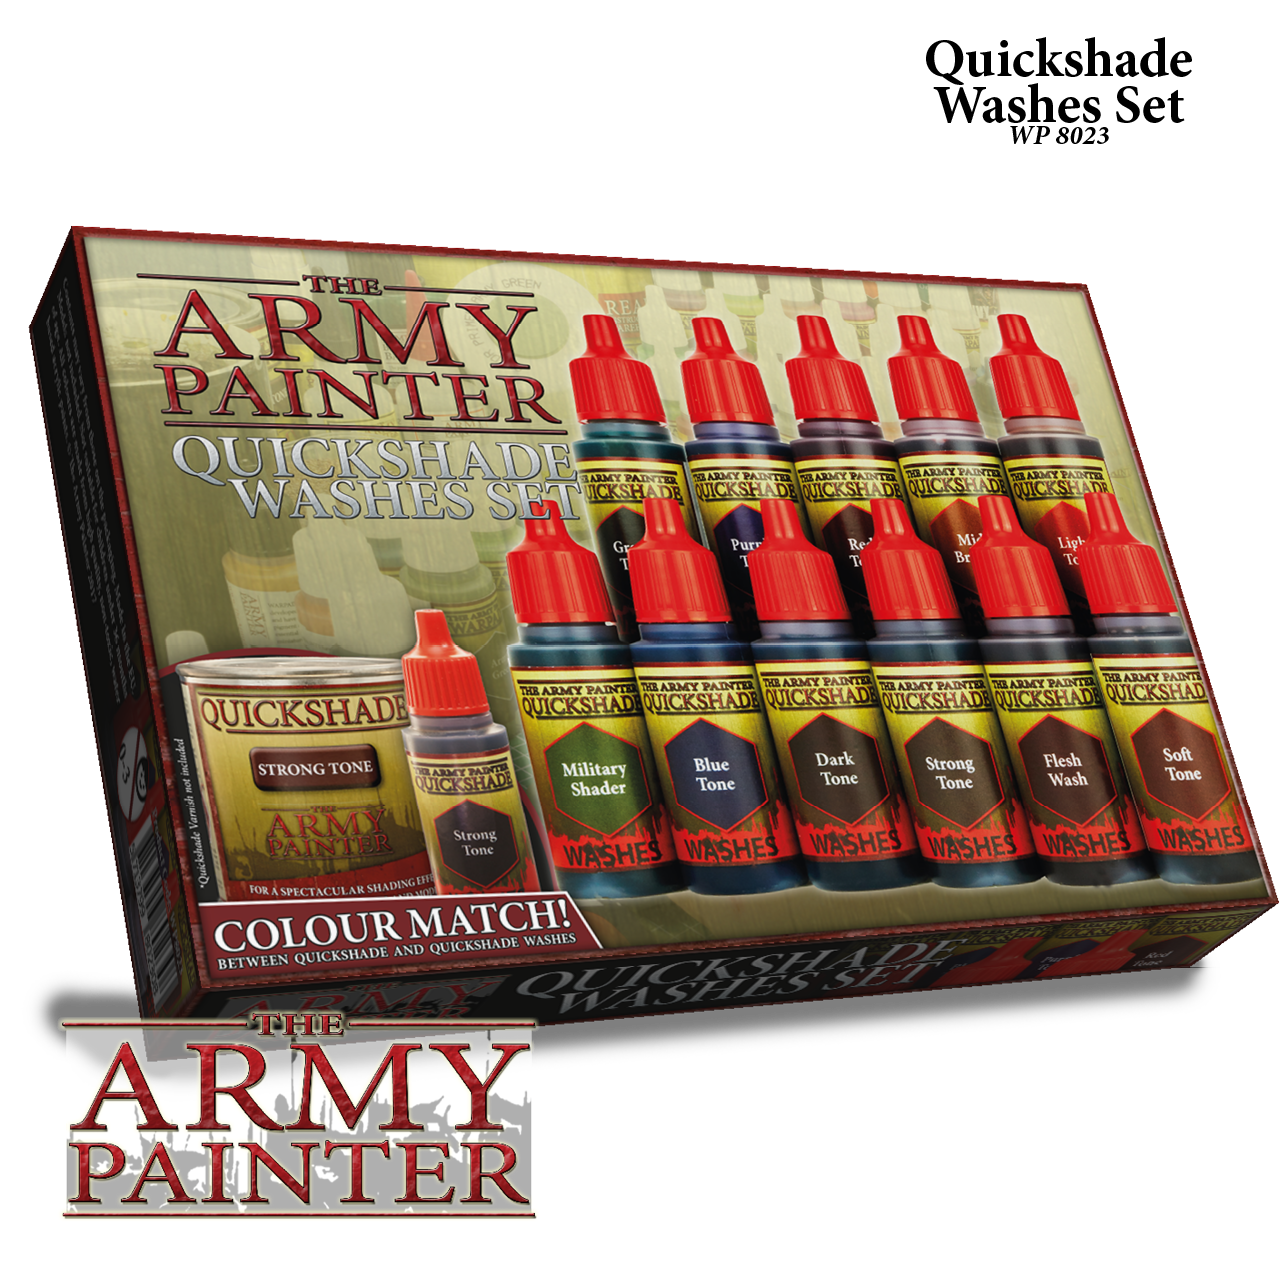 Army Painter Quickshades Washes Set